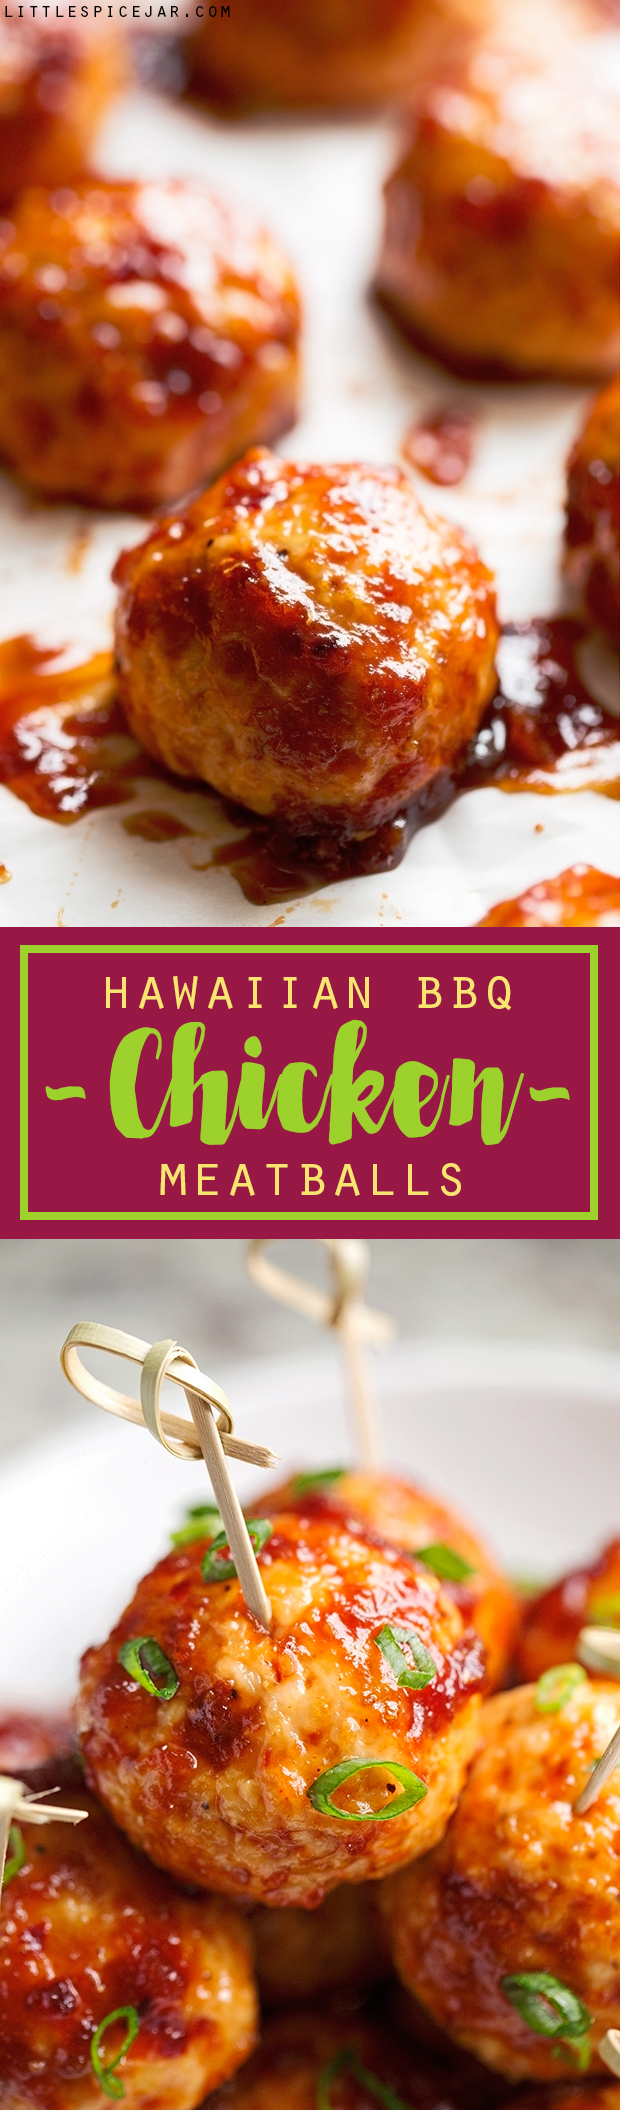 Hawaiian BBQ Chicken Meatballs - easy to make chicken meatballs covered in homemade hawaiian bbq sauce! #chickenmeatballs #meatballs #hawaiiianbbqsauce | Littlespicejar.com